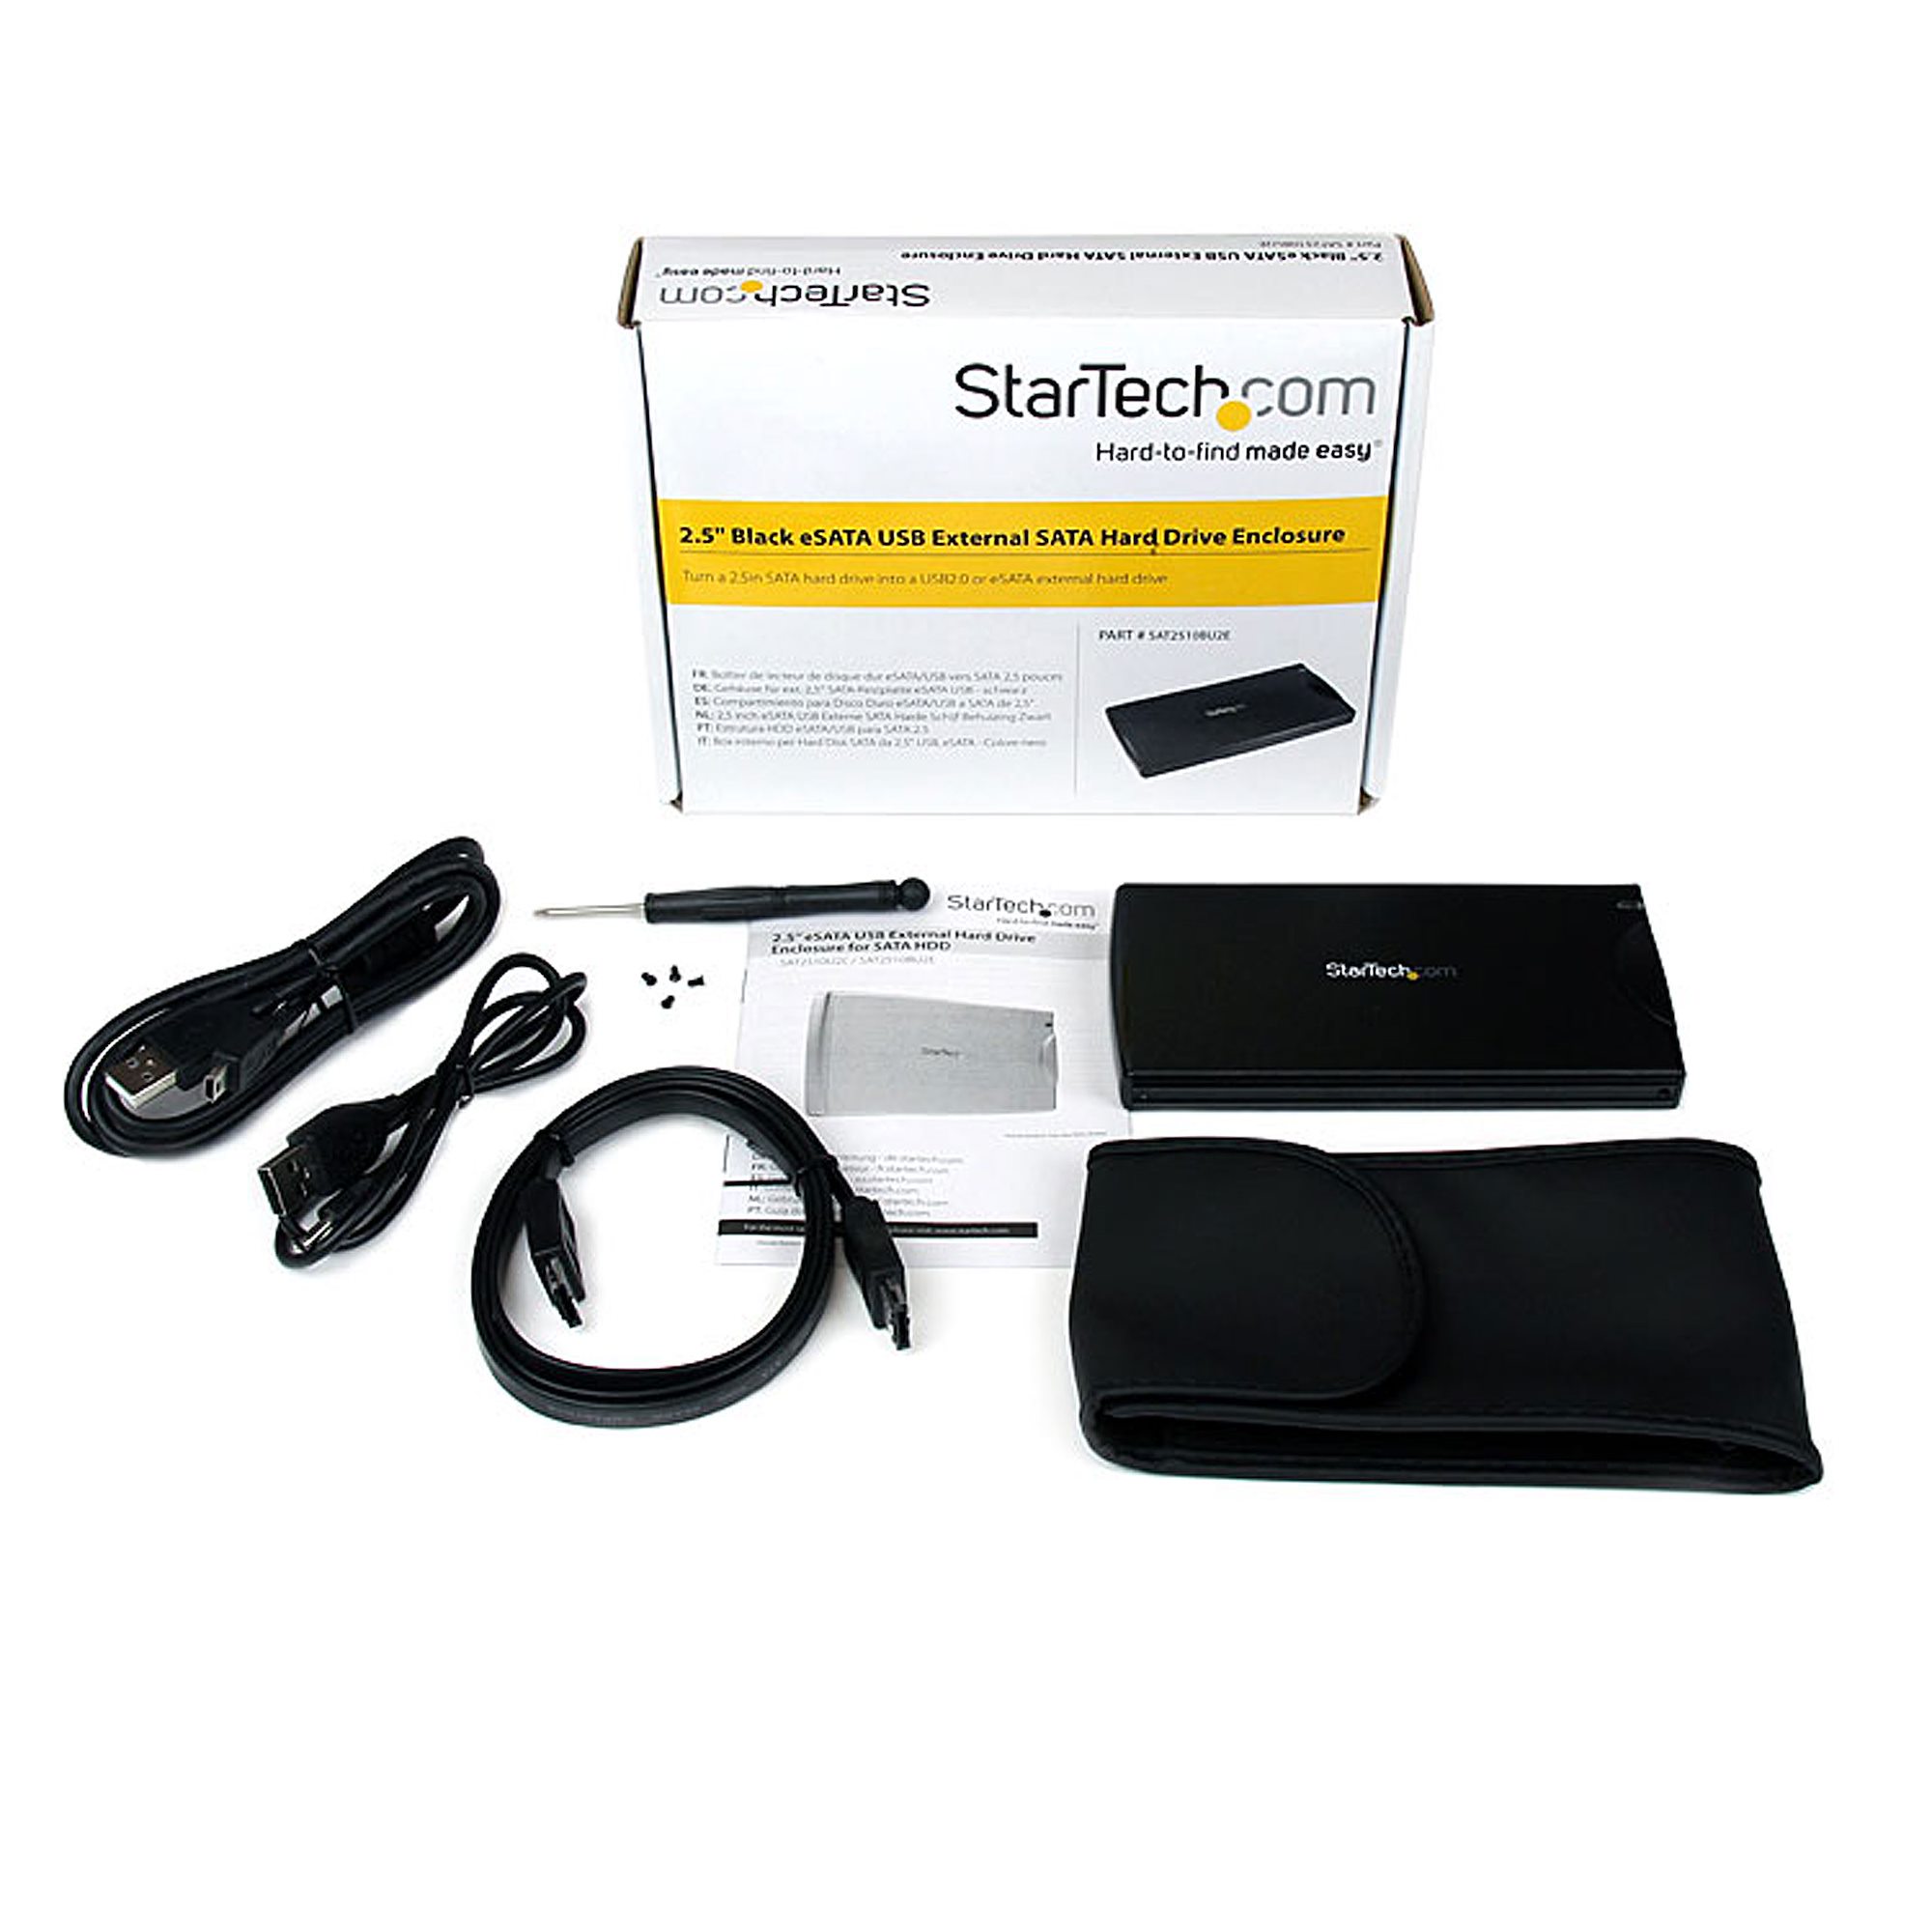 eSATA USB External HDD Enclosure - Cajas para externas | StarTech.com España